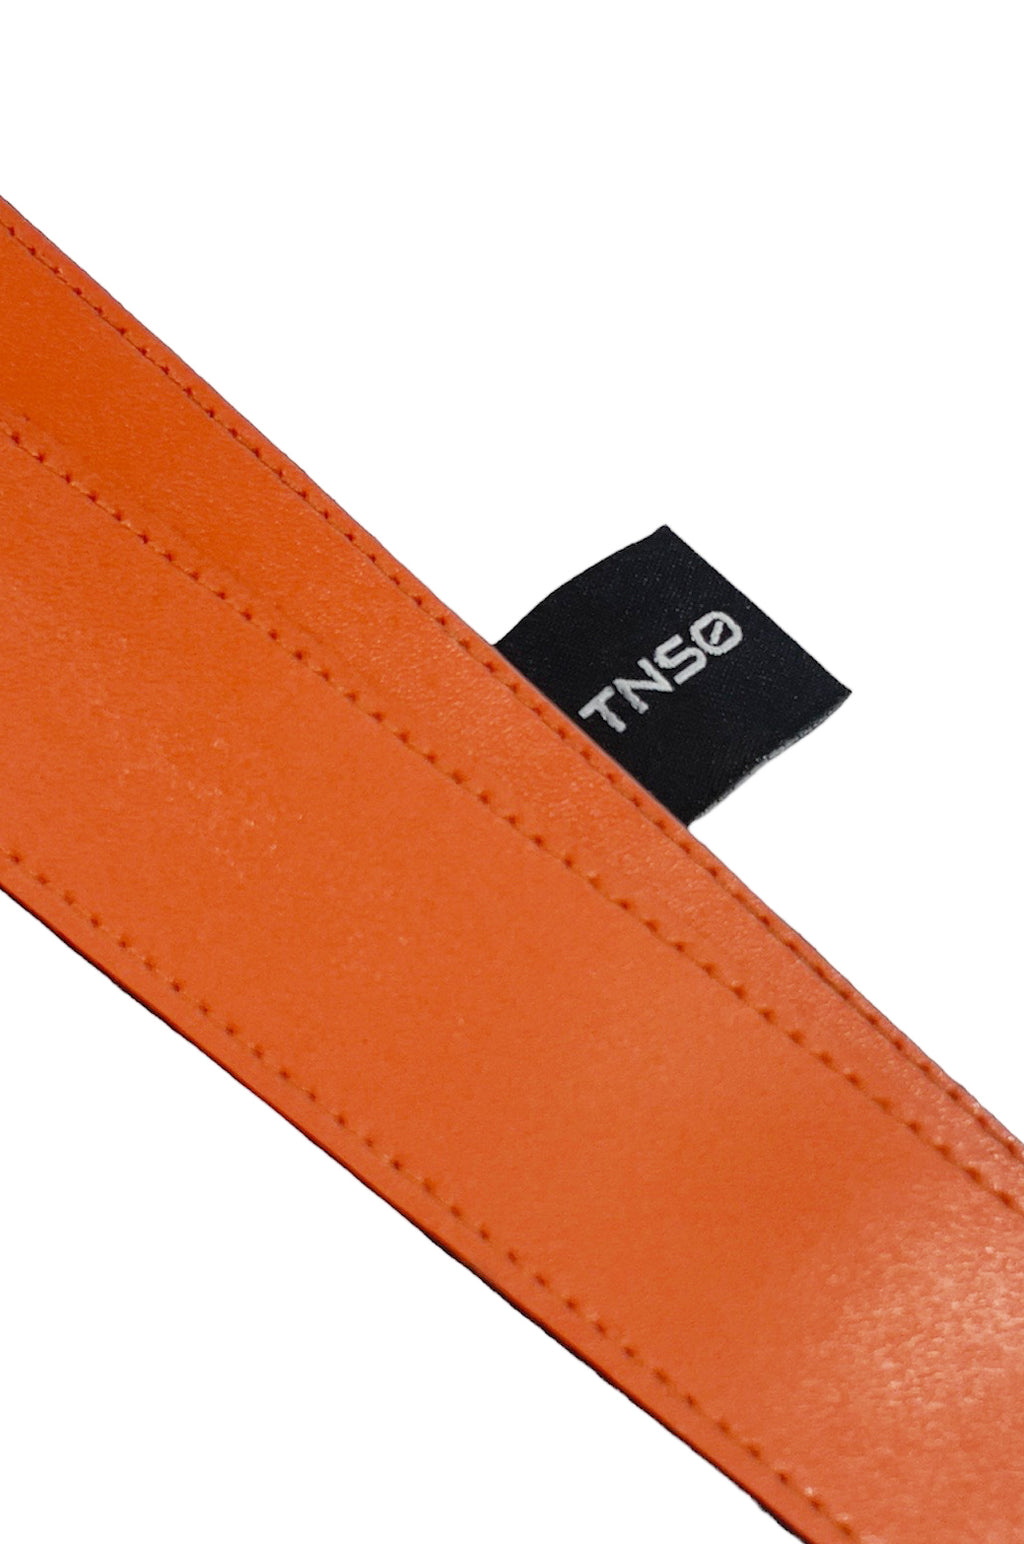  Tnso Portachiavi Leather Lanyard Limited Edition Orange Arancione Uomo - 2